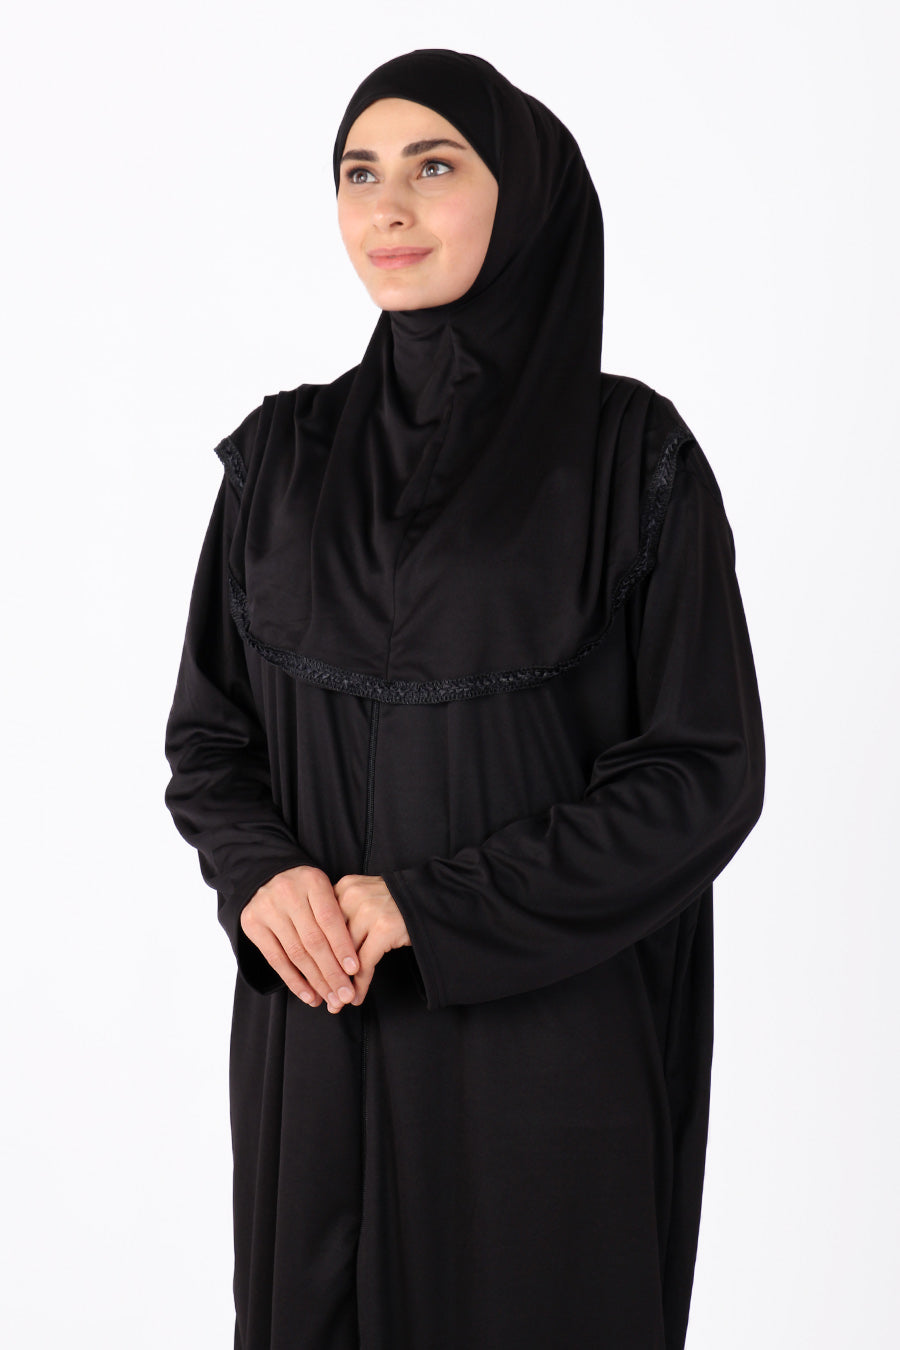 Black Turkish Prayer Dress